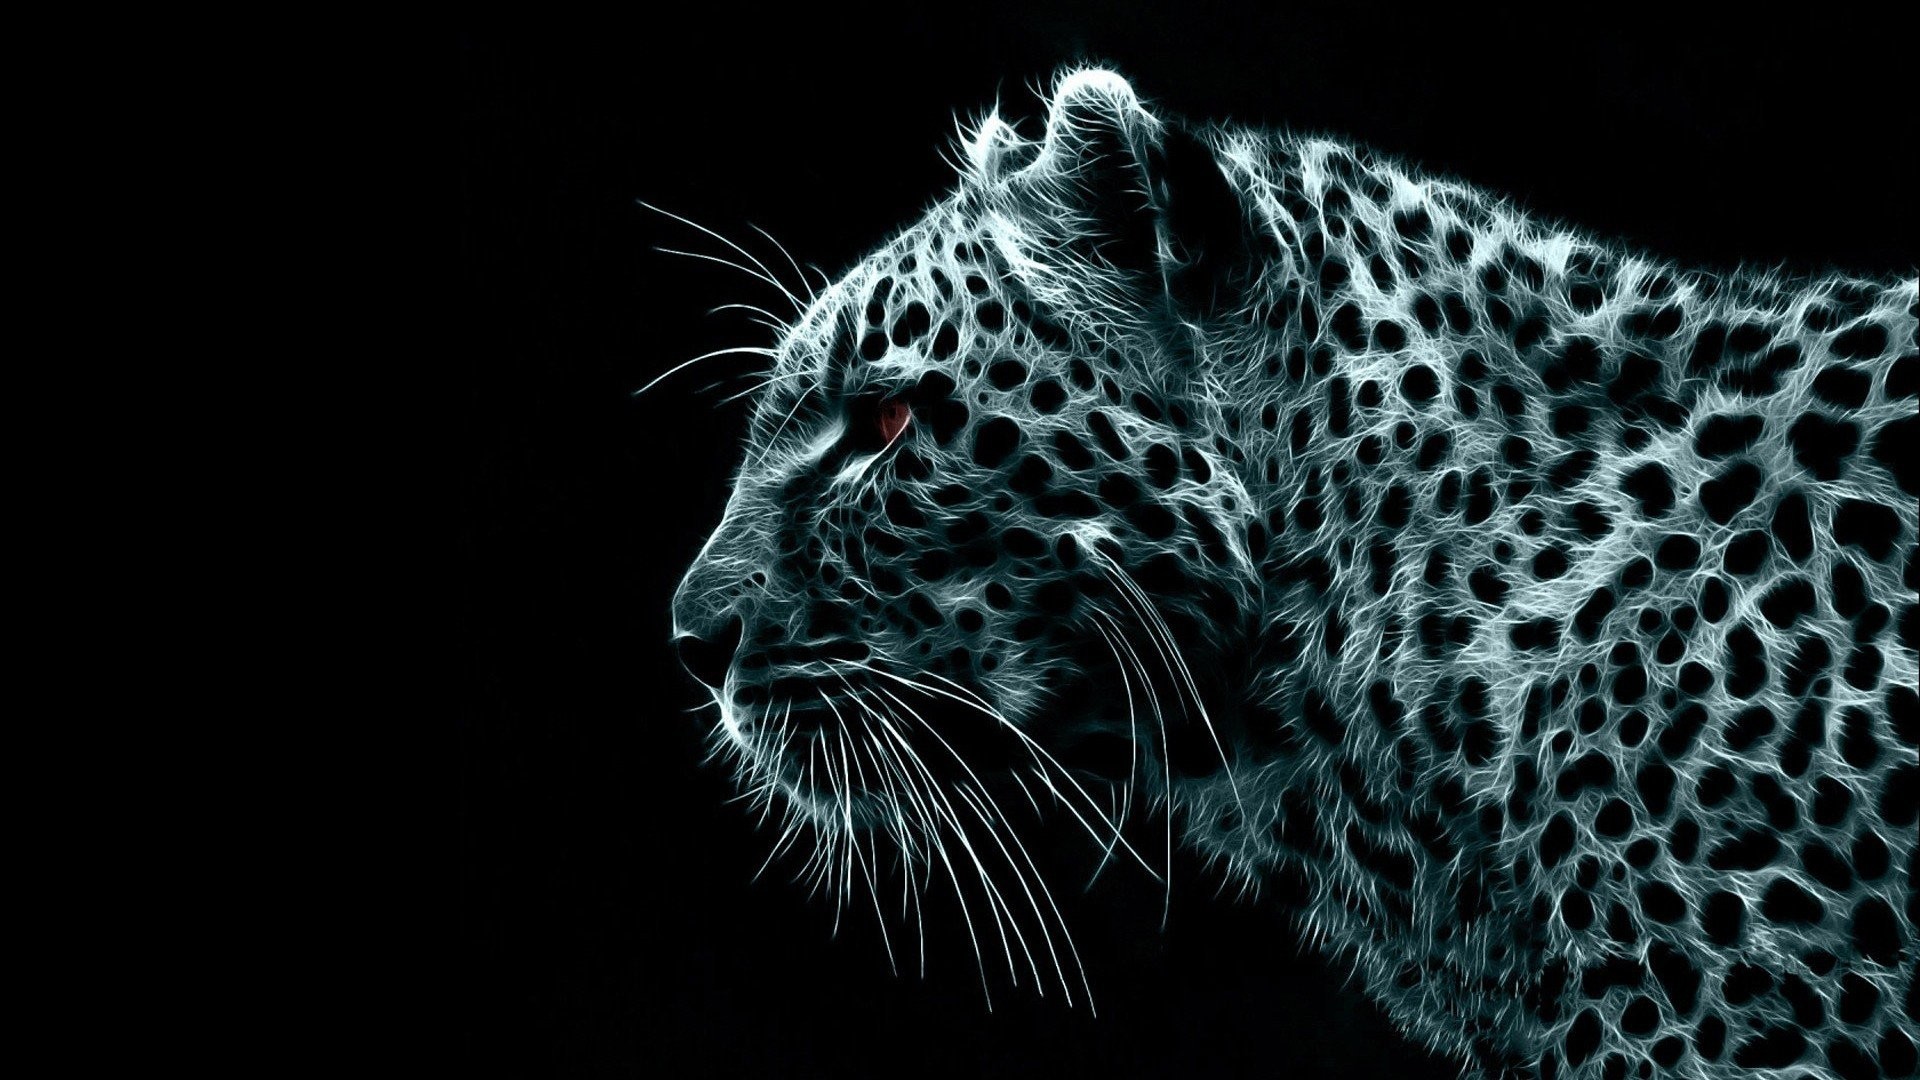 Jaguar Wallpaper Images - Free Download on Freepik